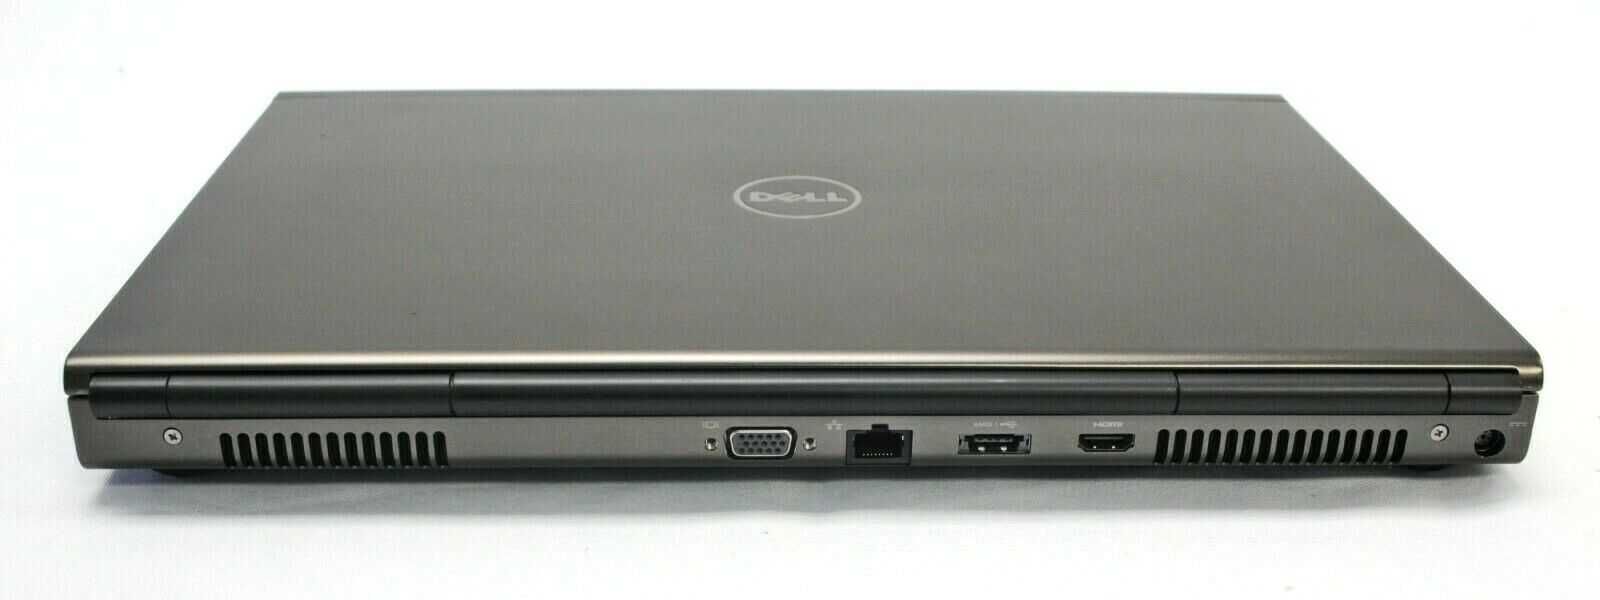 Лаптоп DELL PRECISION M4700 I7-3540M 16GB 256GB SSD 15.6 NVIDIA K2000M